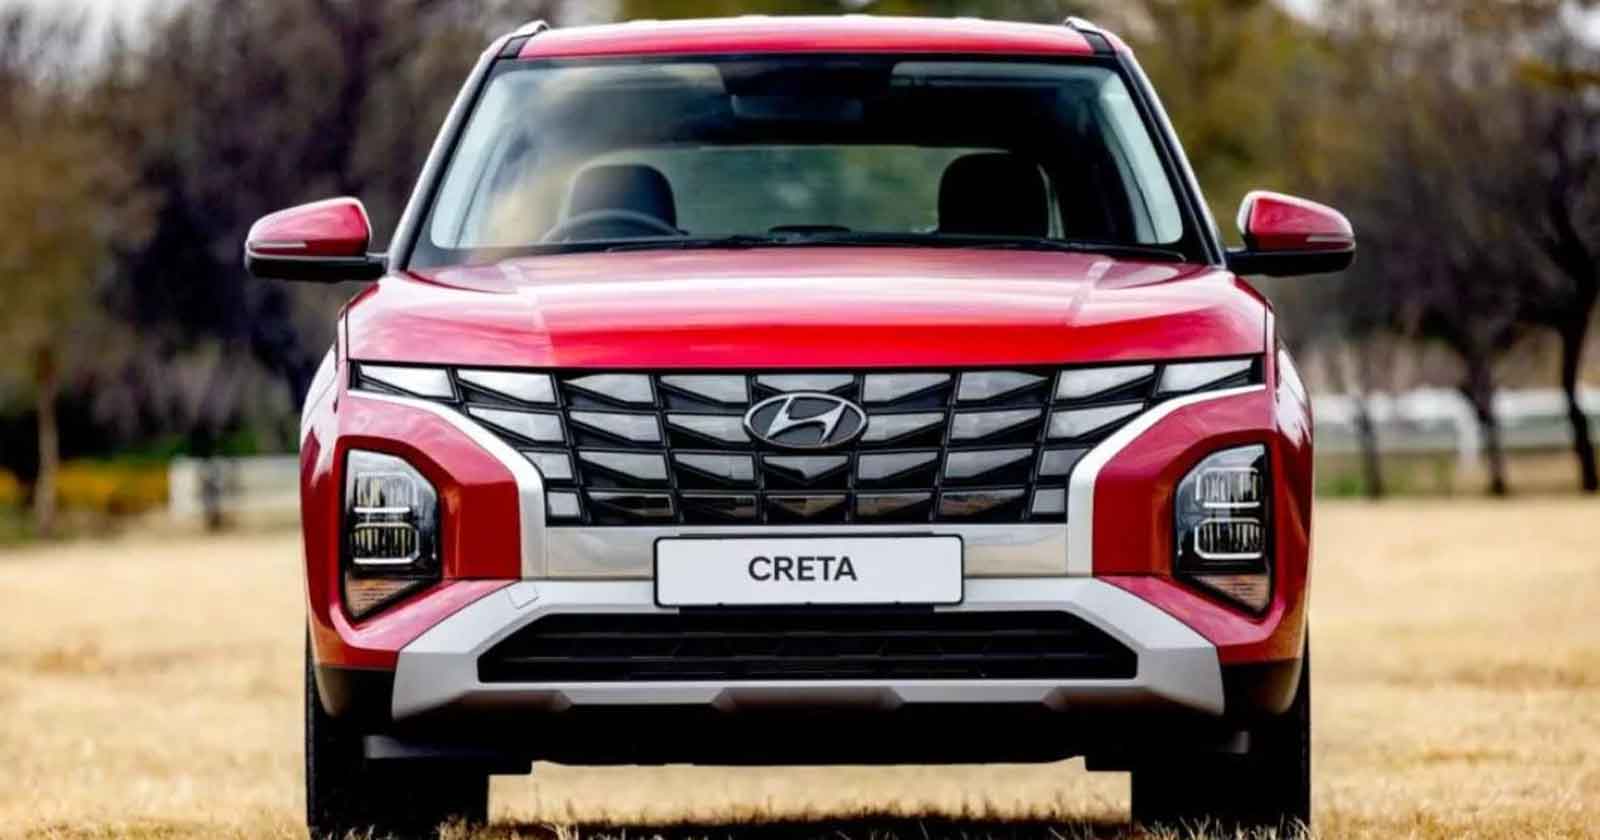 Hyundai Creta Features